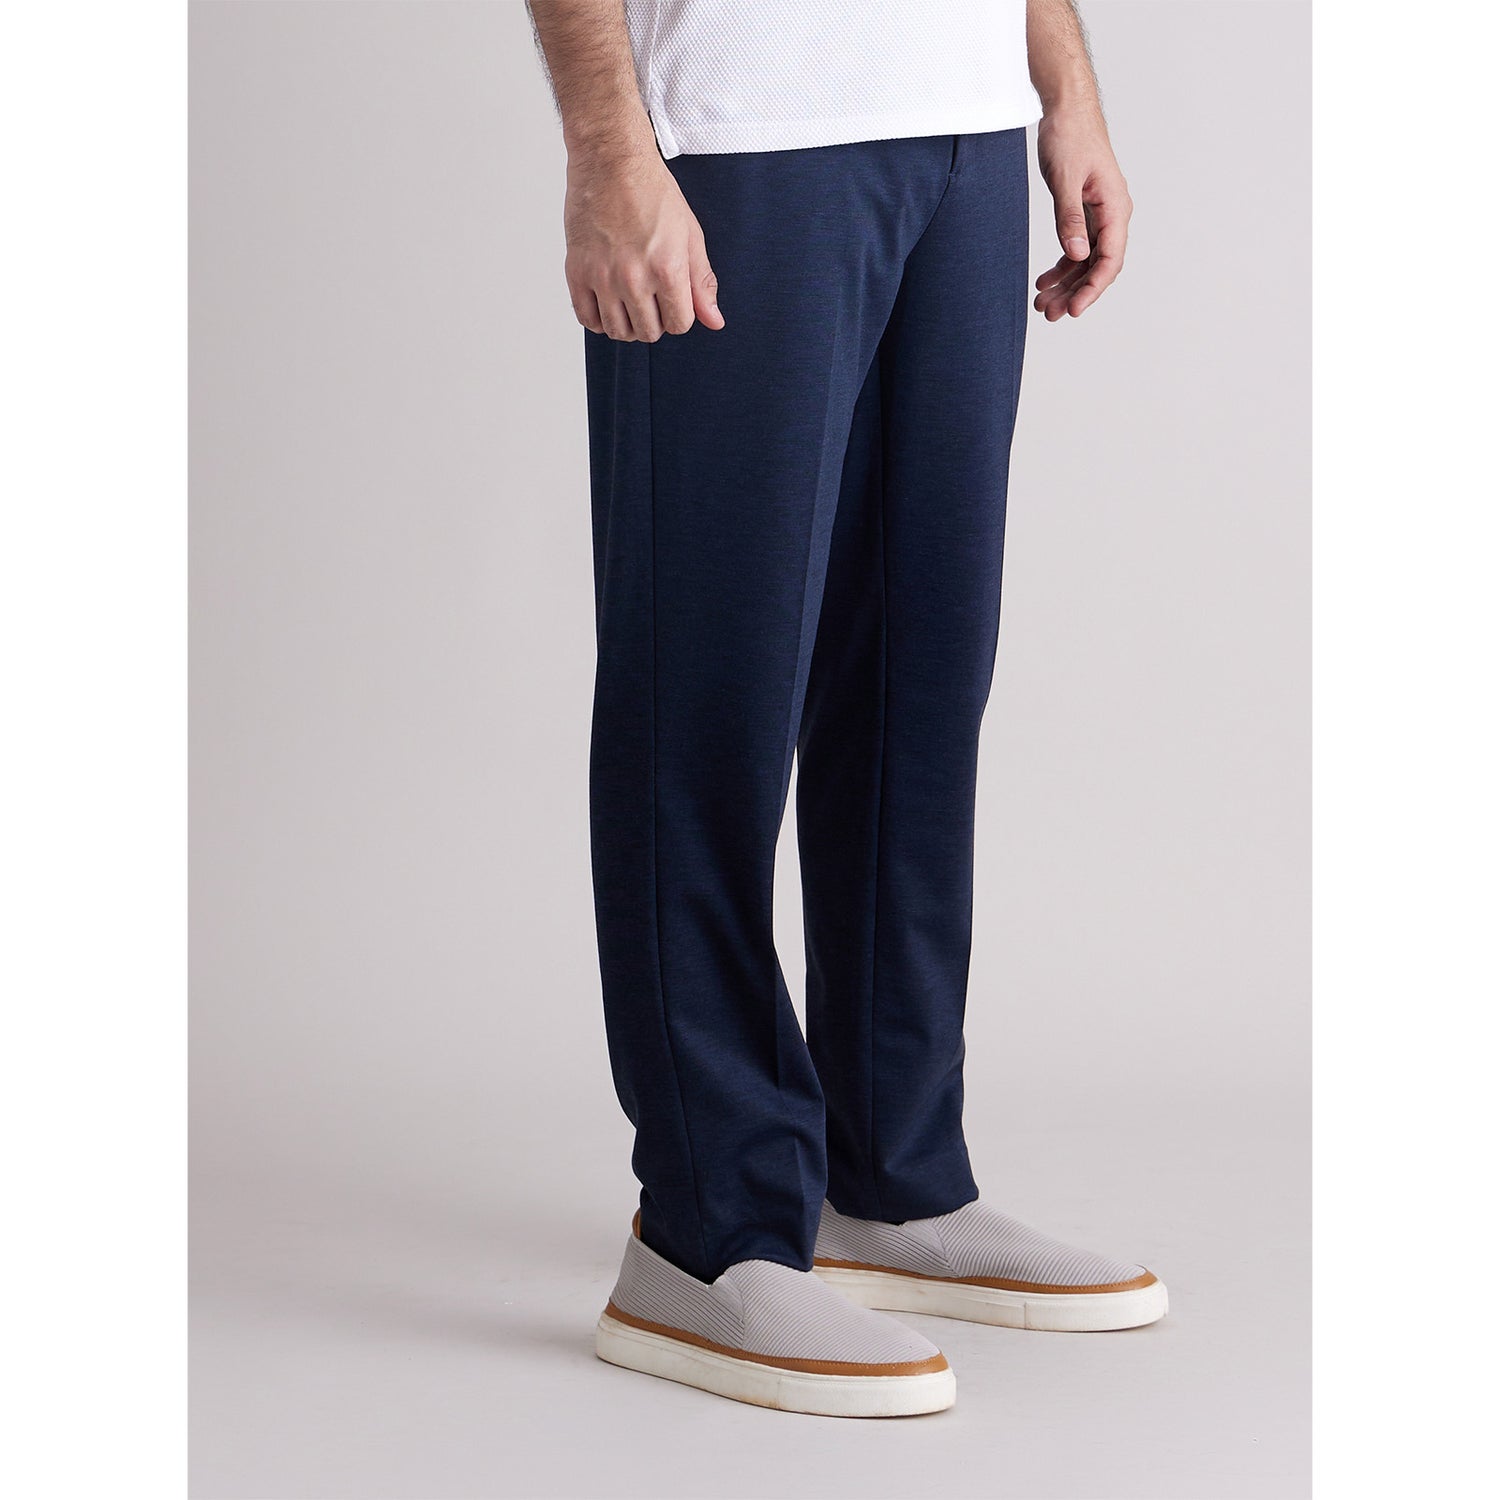 Men Solid Blue Track-pants (Various Sizes)